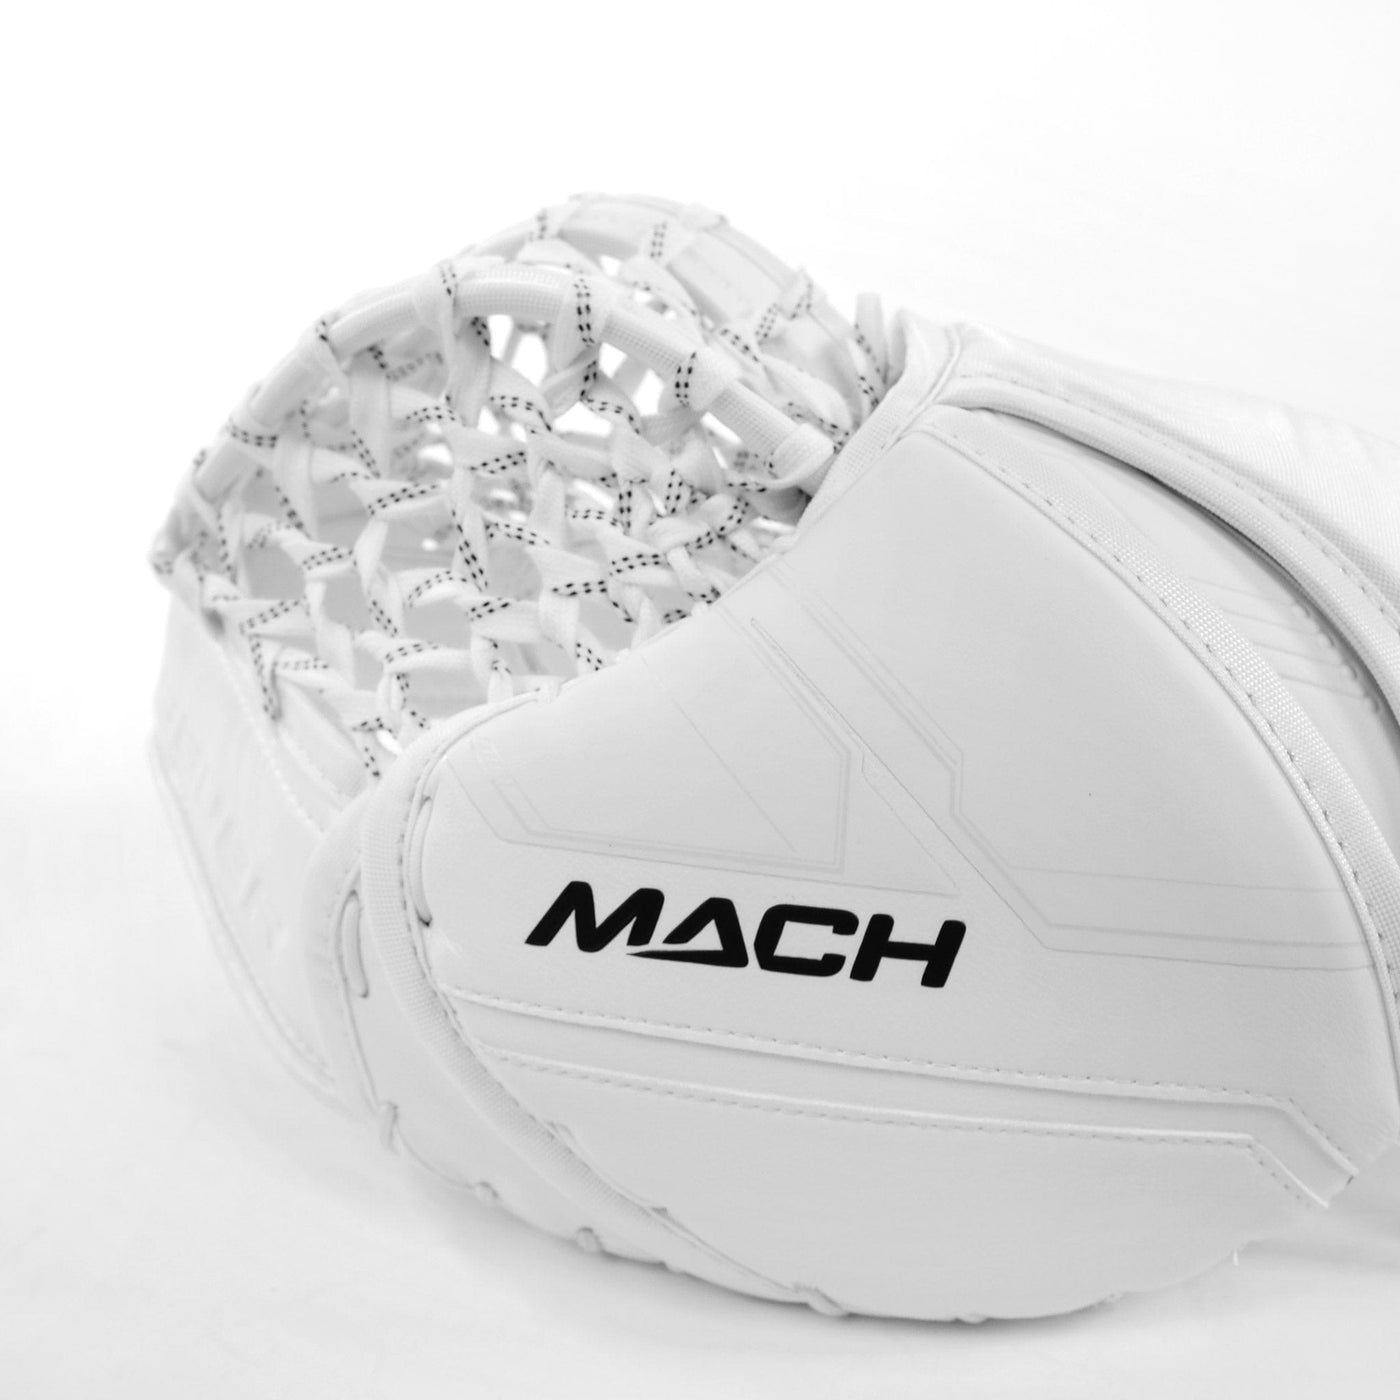 mach-senior-catcher-white